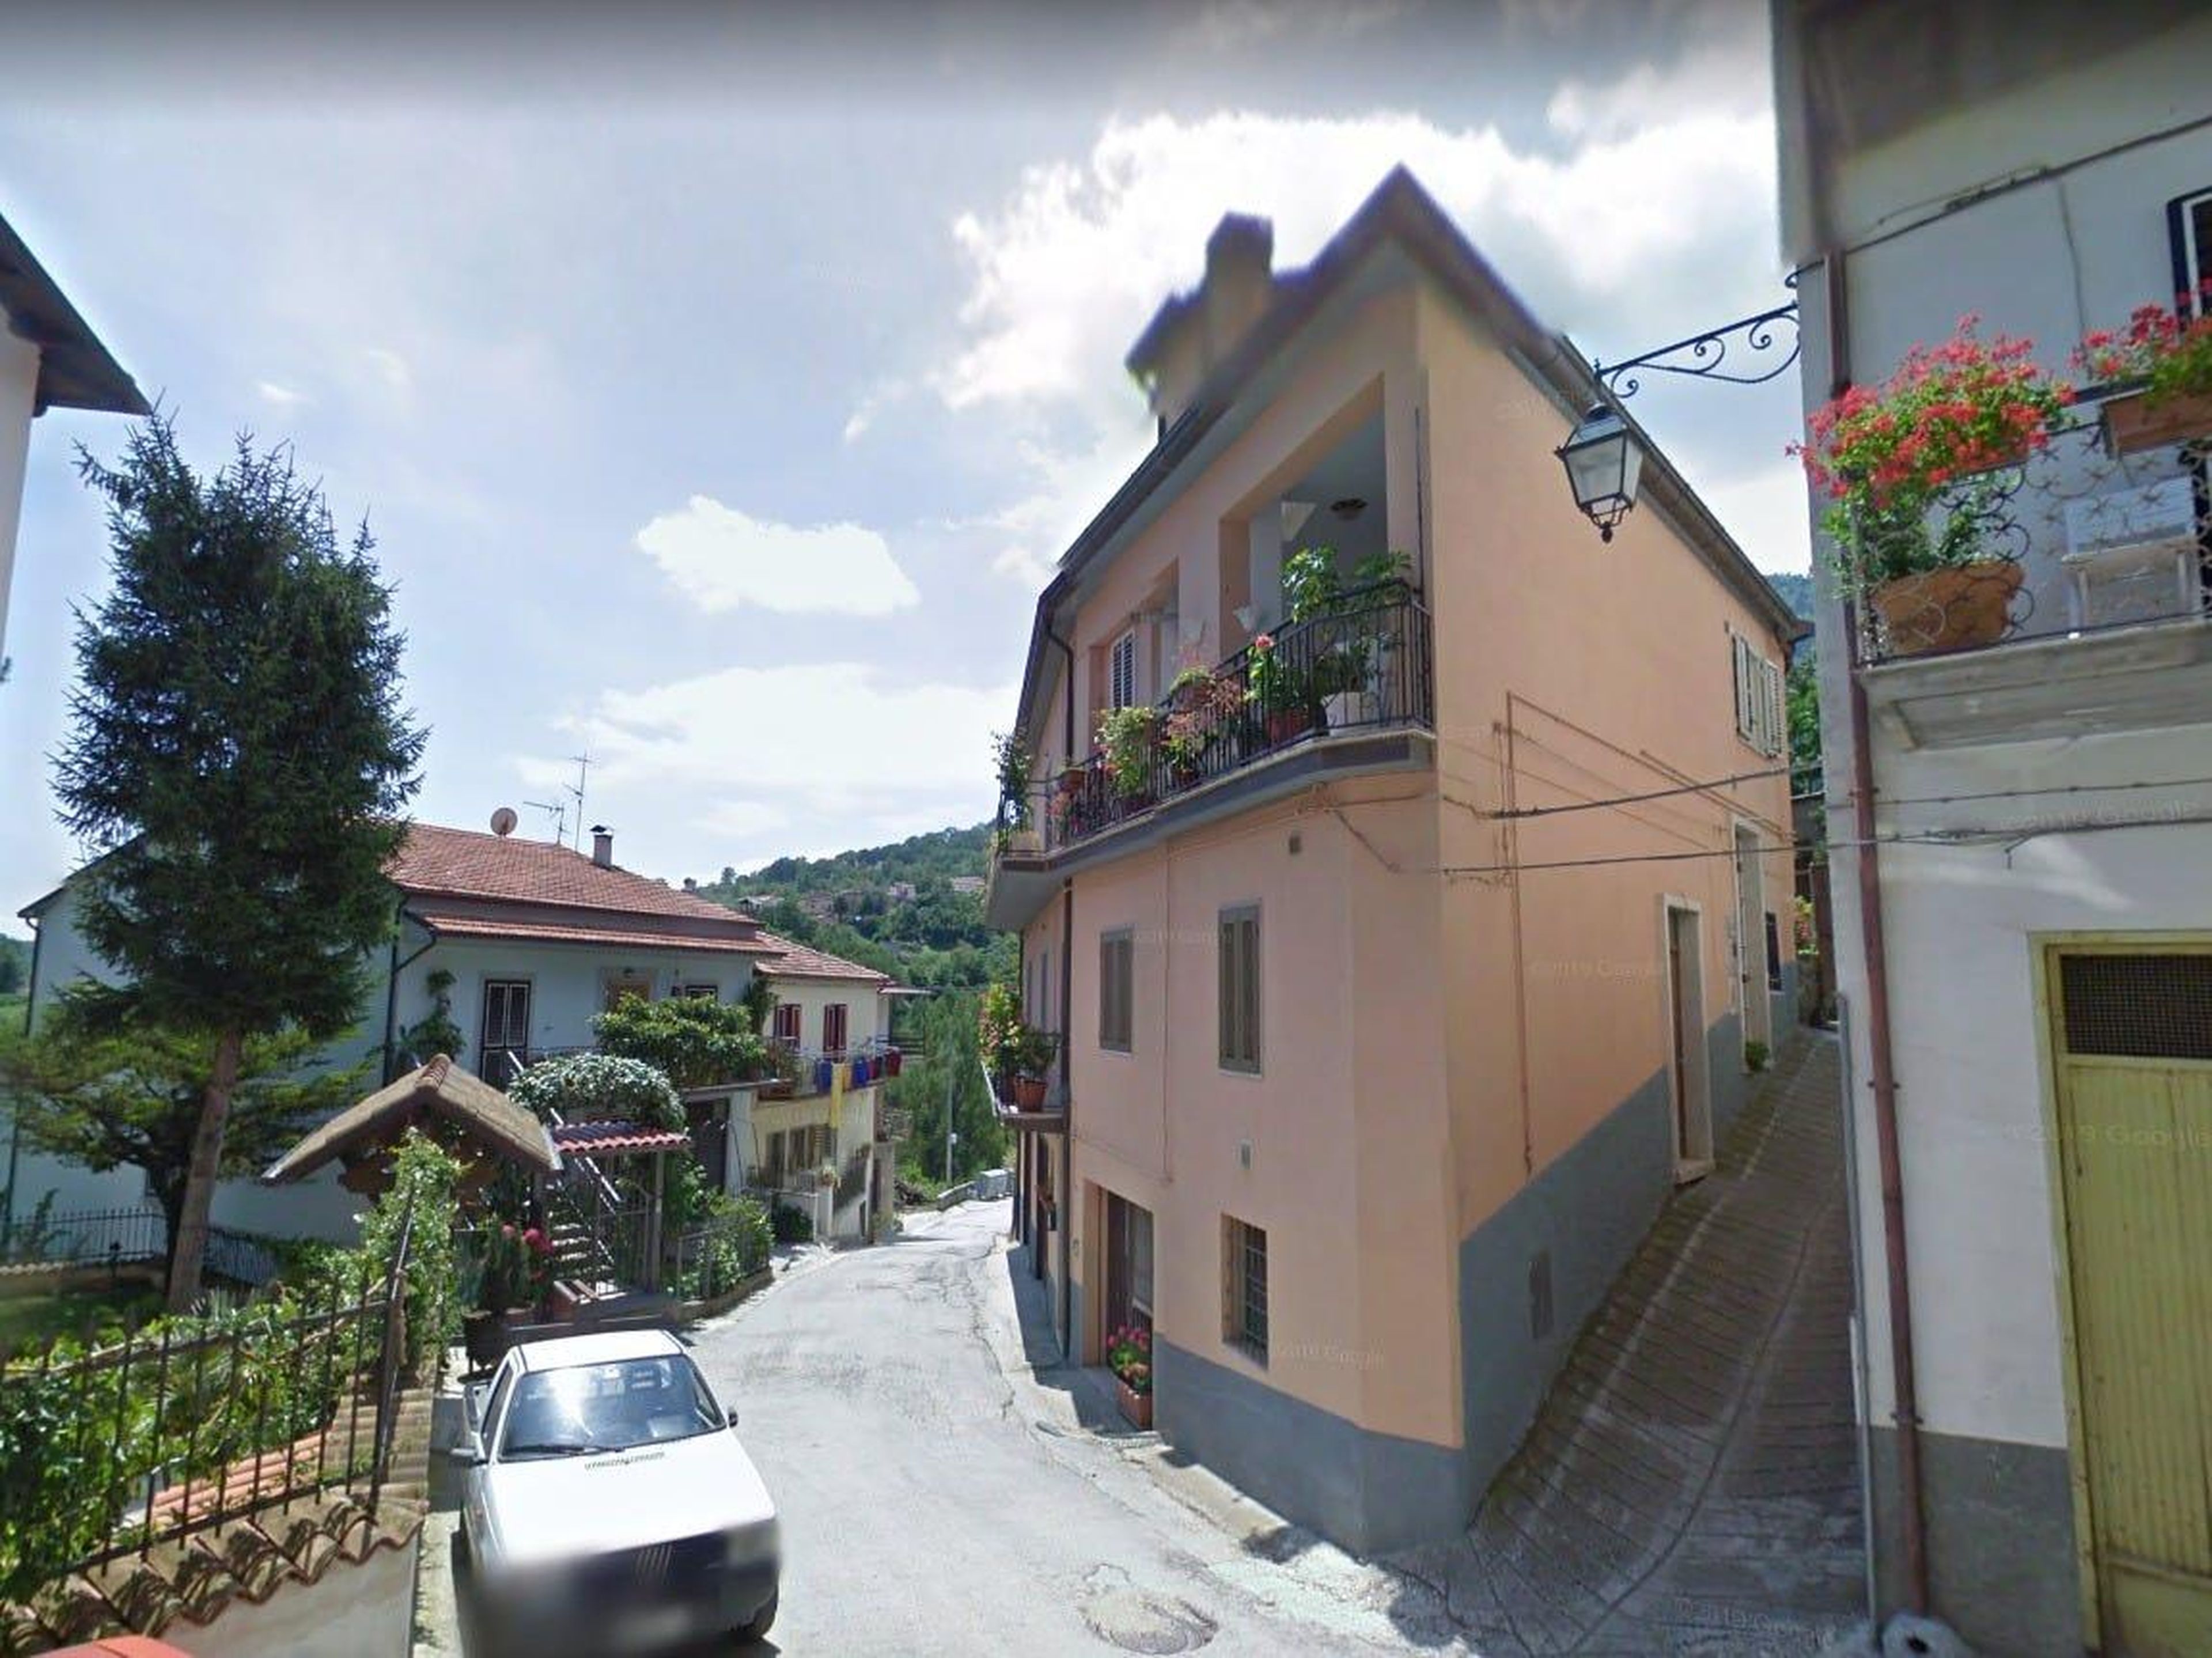 San Giovanni. Google Maps